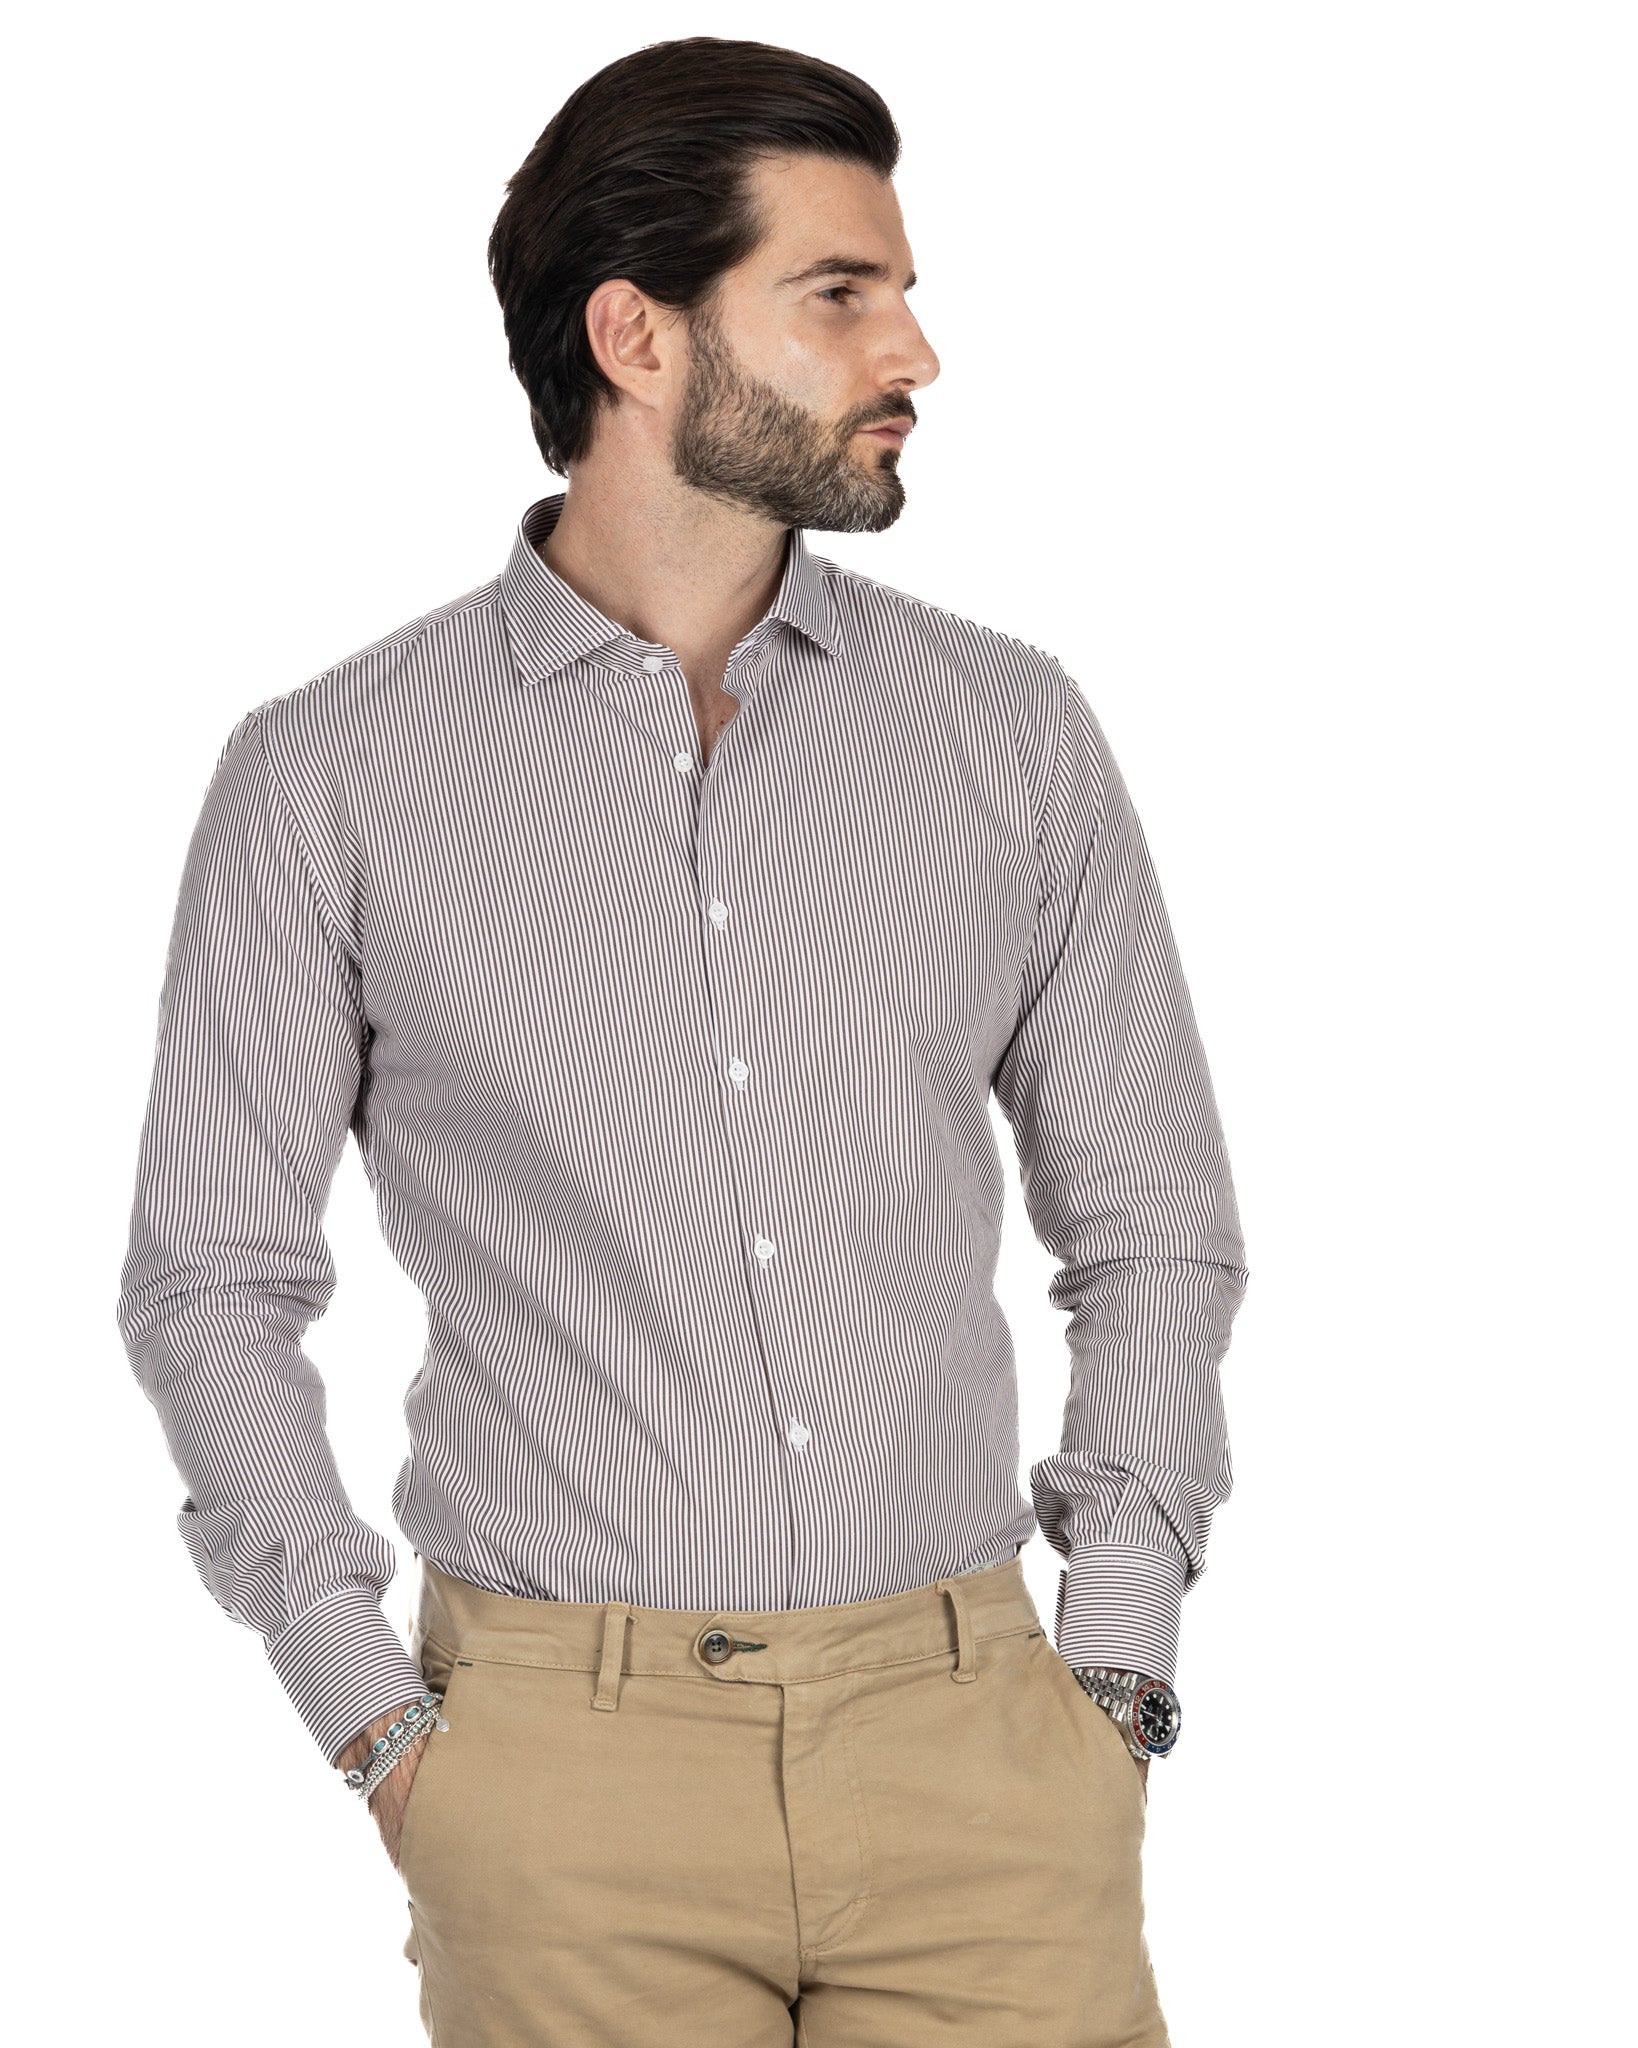 Shirt - slim fit narrow stripe brown